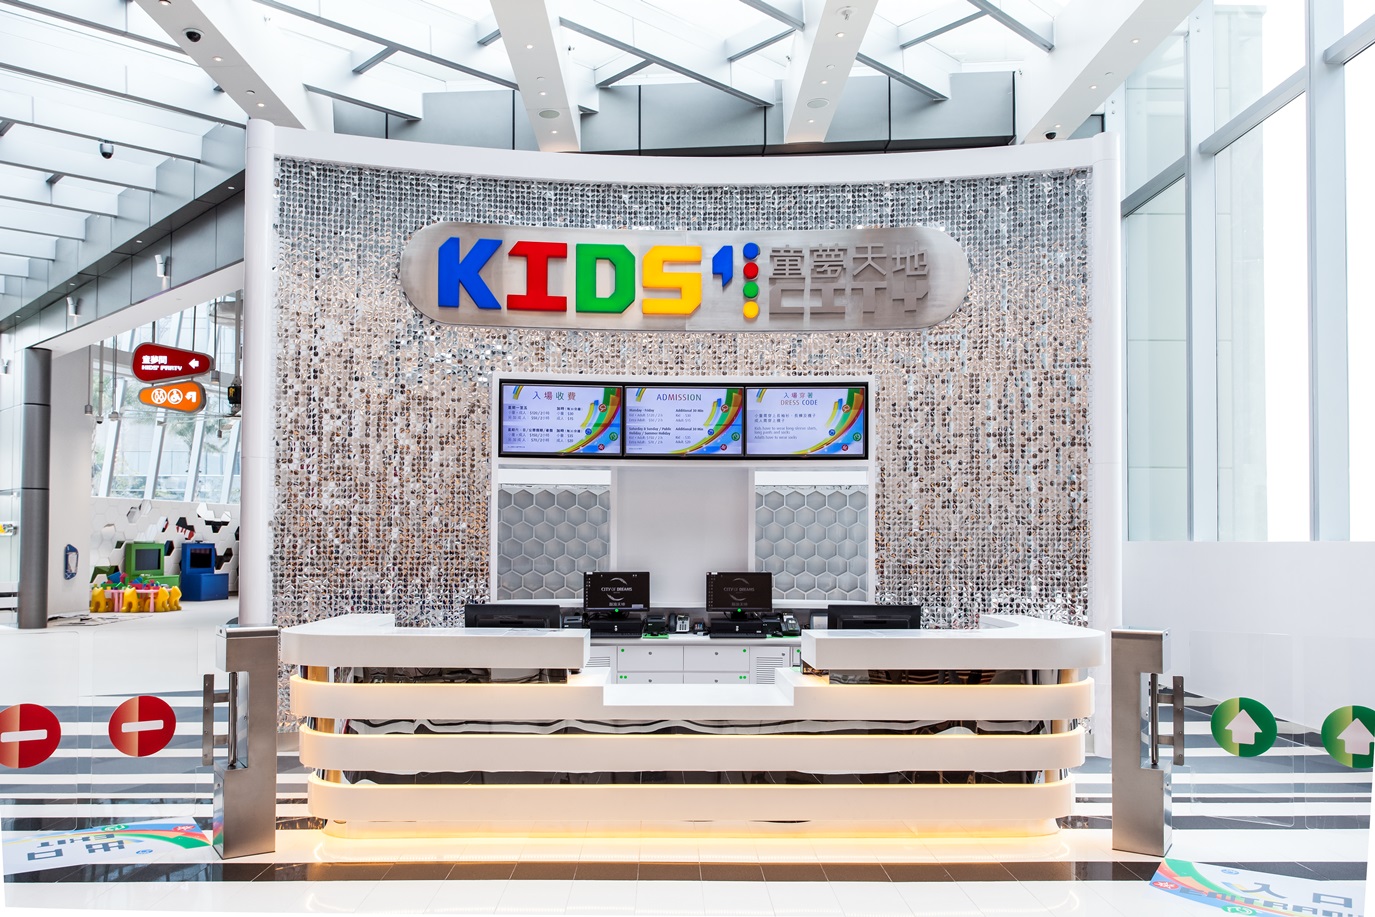 Kids' City Macau: Entrance